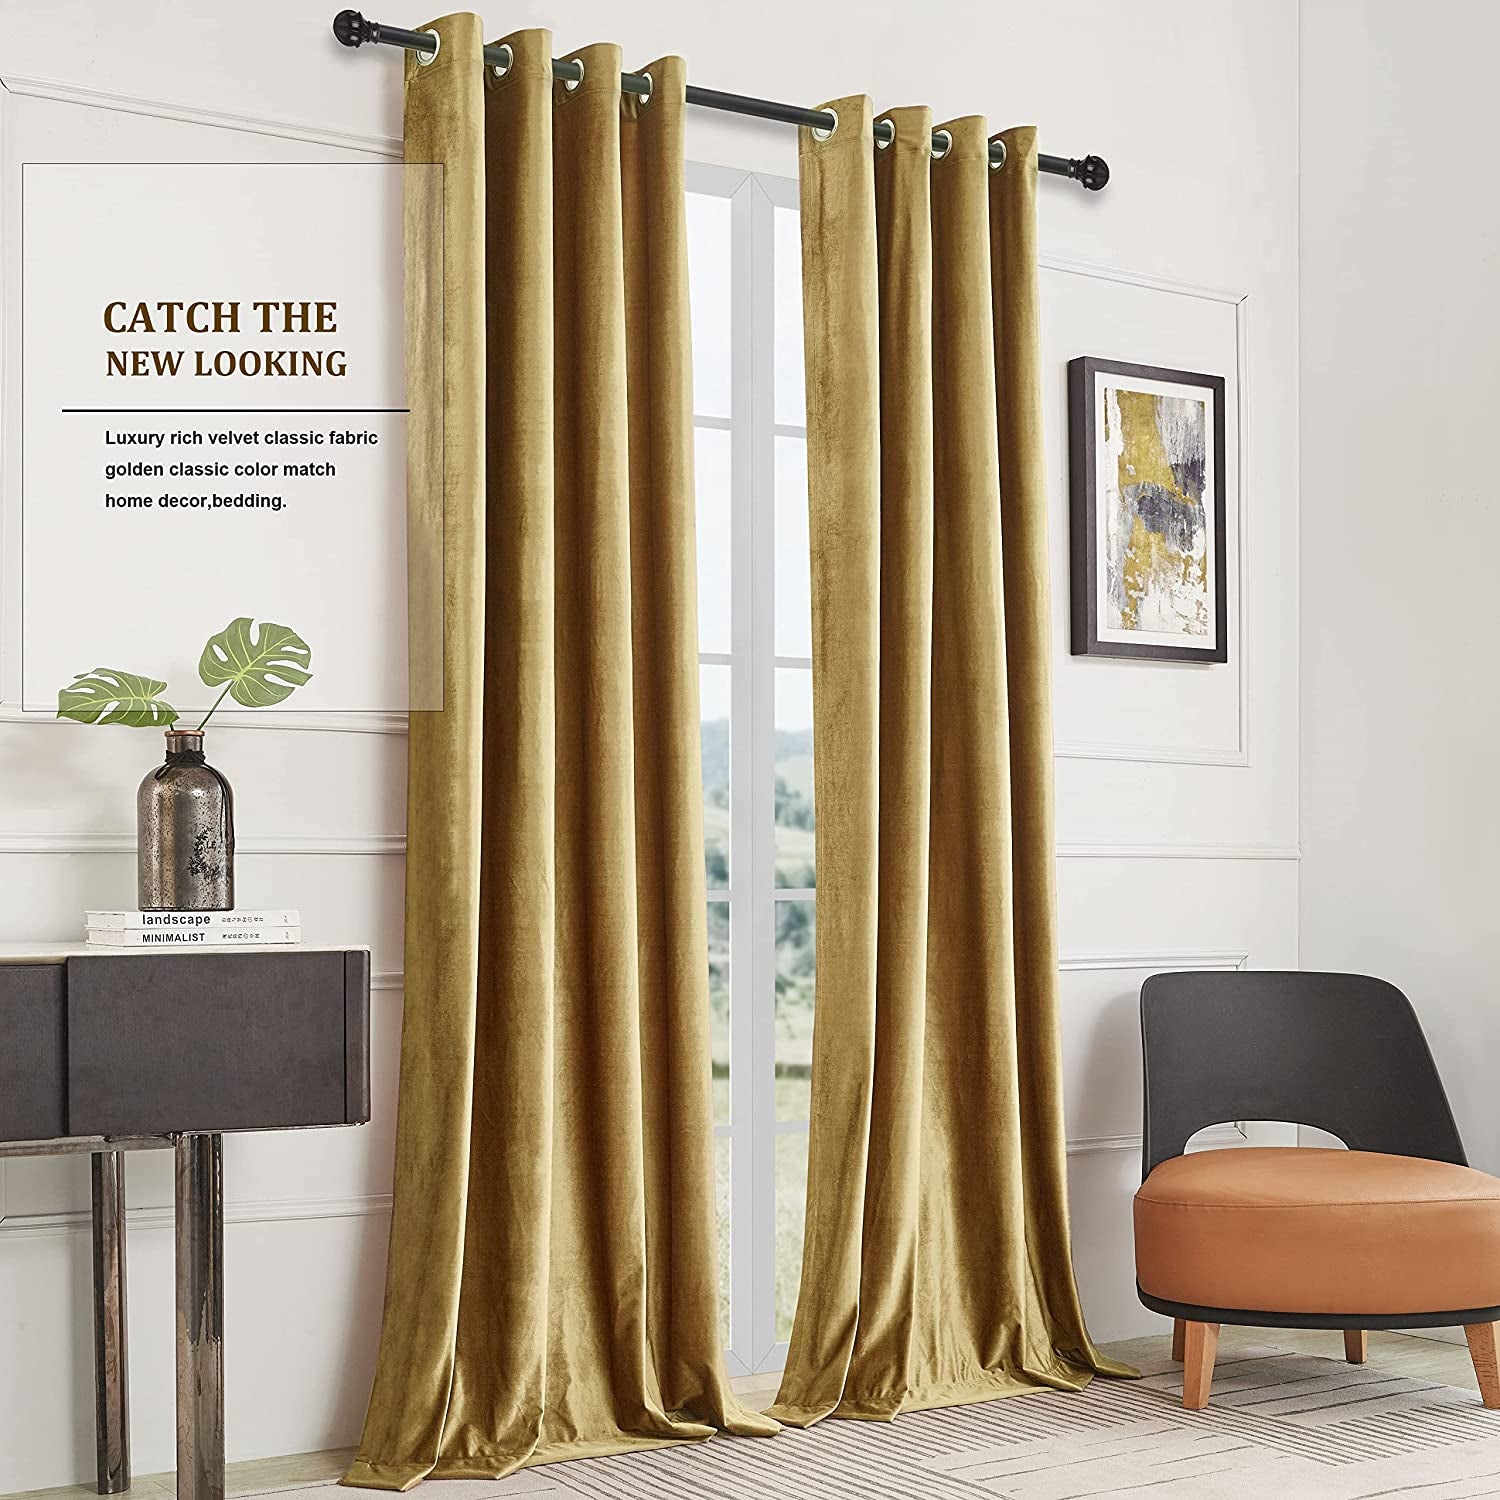 BULBUL Velvet Gold Curtains 84 Inch Length- Living Room Blackout Thermal Window Drapes Darkening Decor Grommet Curtains for Bedroom Set of 2 Panels  BULBUL   